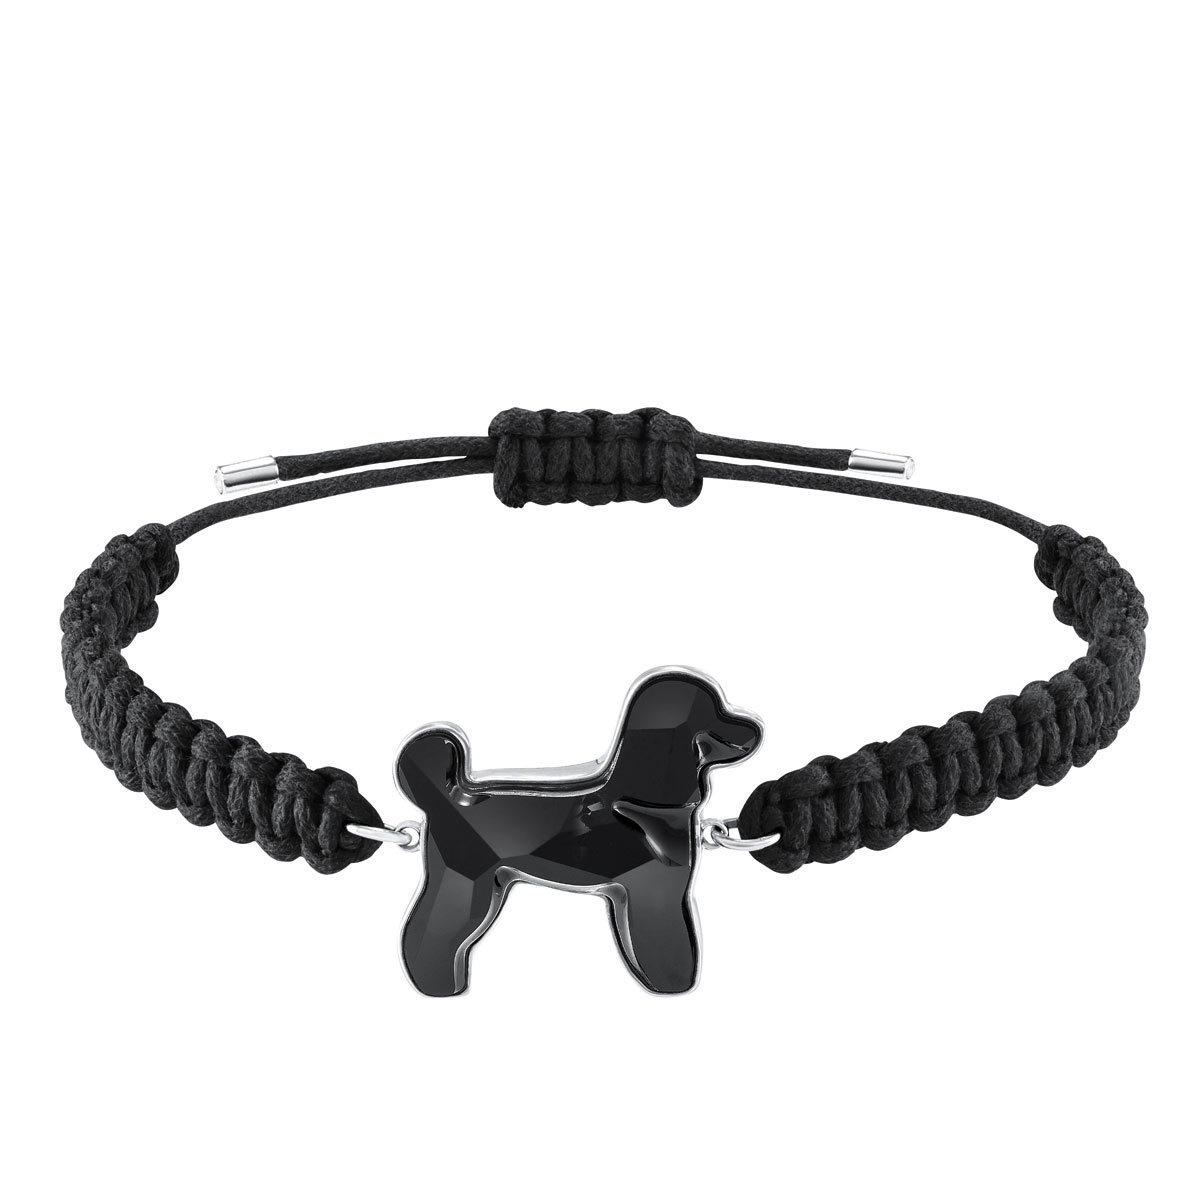 Swarovski Pets Pudel Bracelet, Black, Rhodium